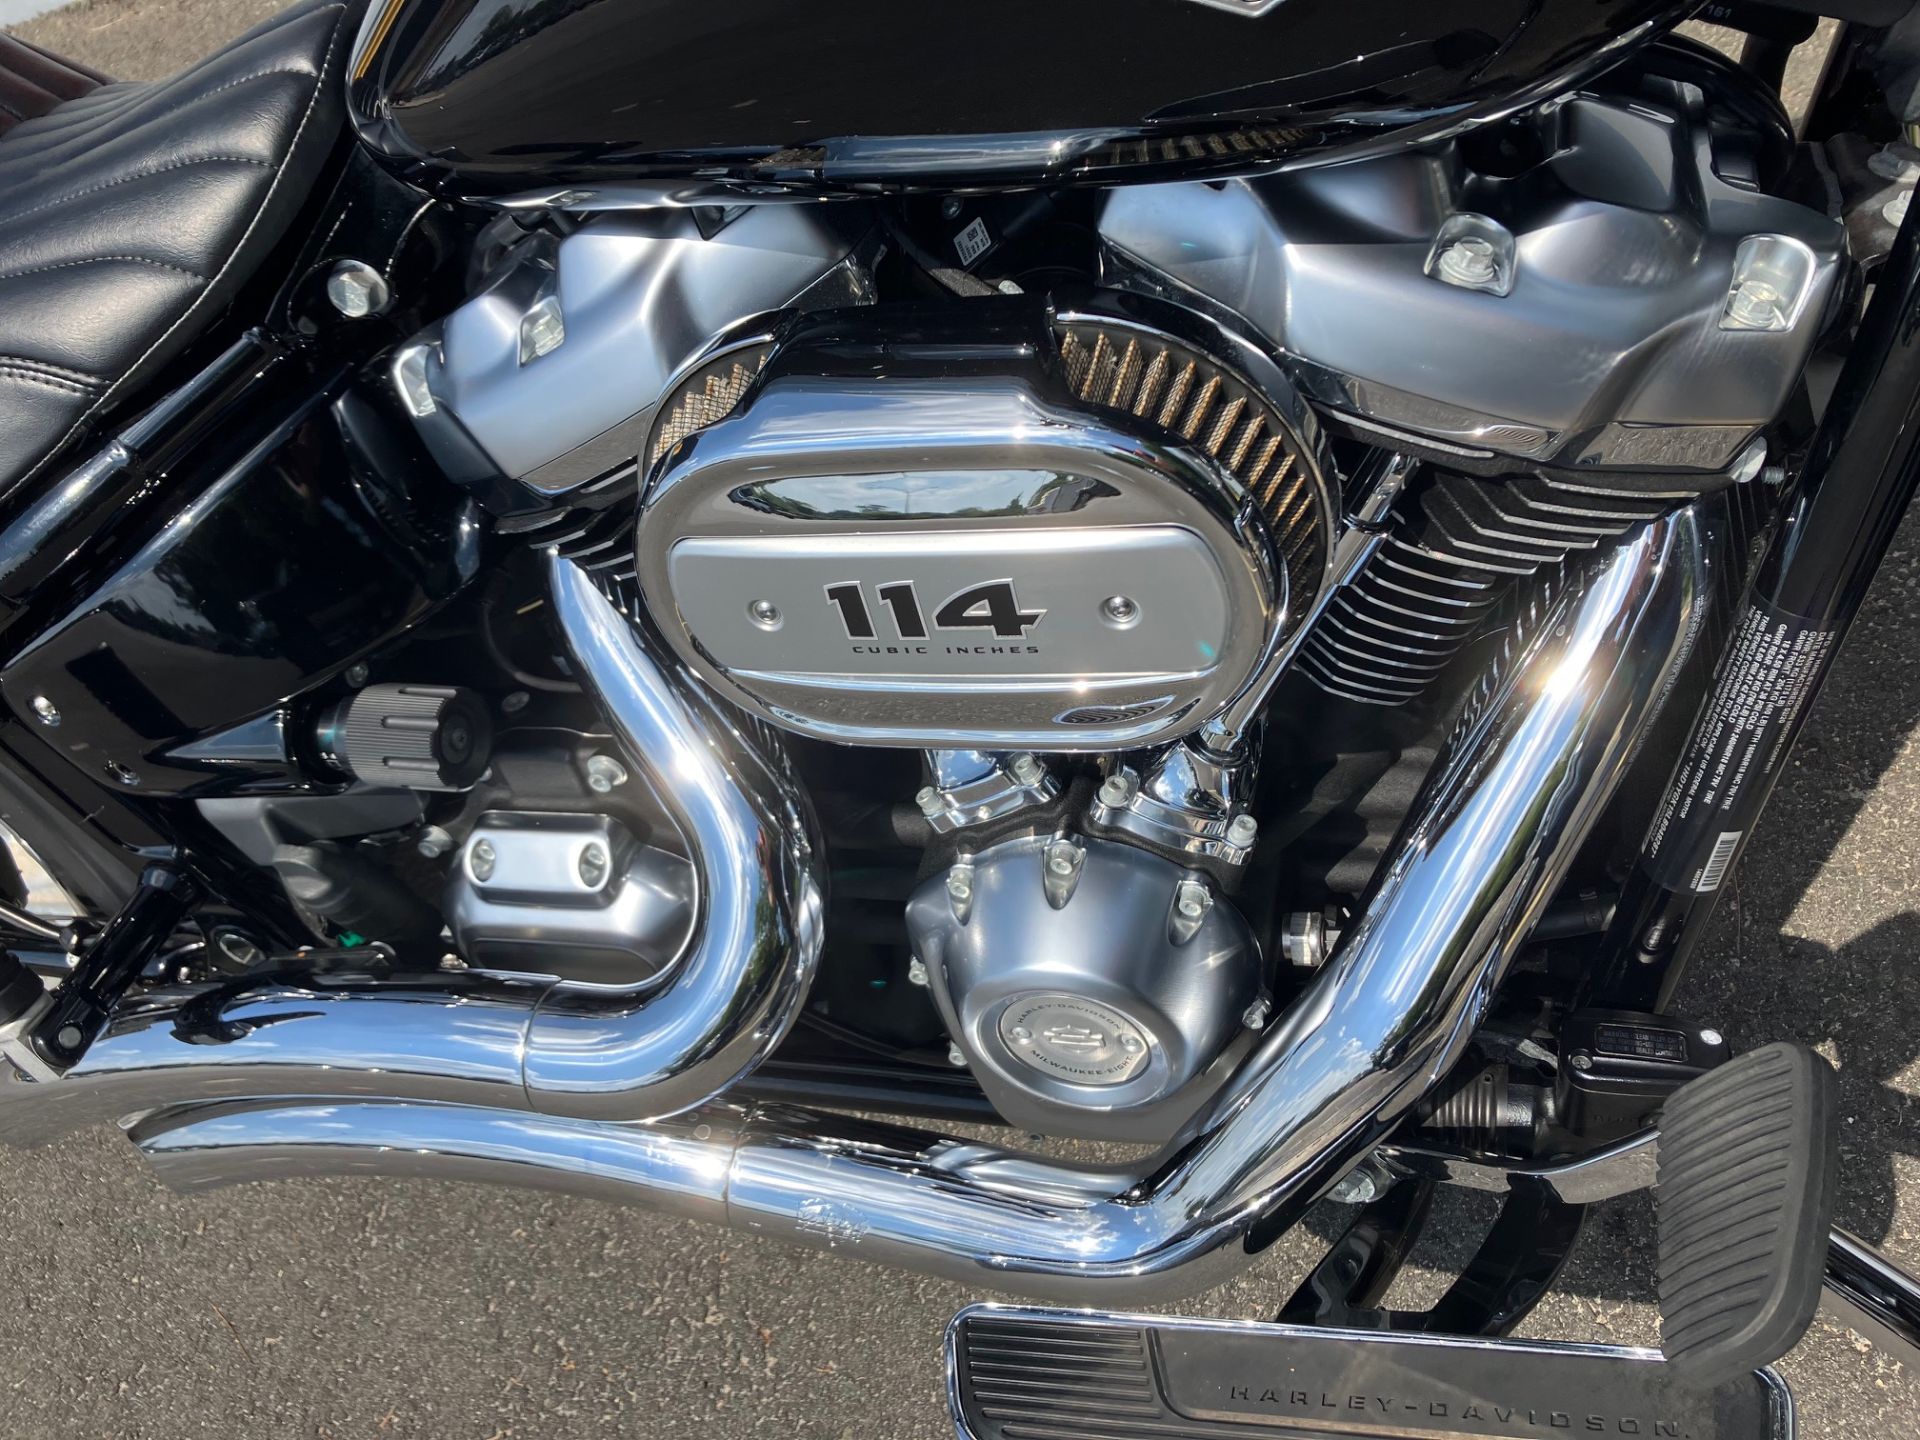 2020 Harley-Davidson FAT BOY in West Long Branch, New Jersey - Photo 9